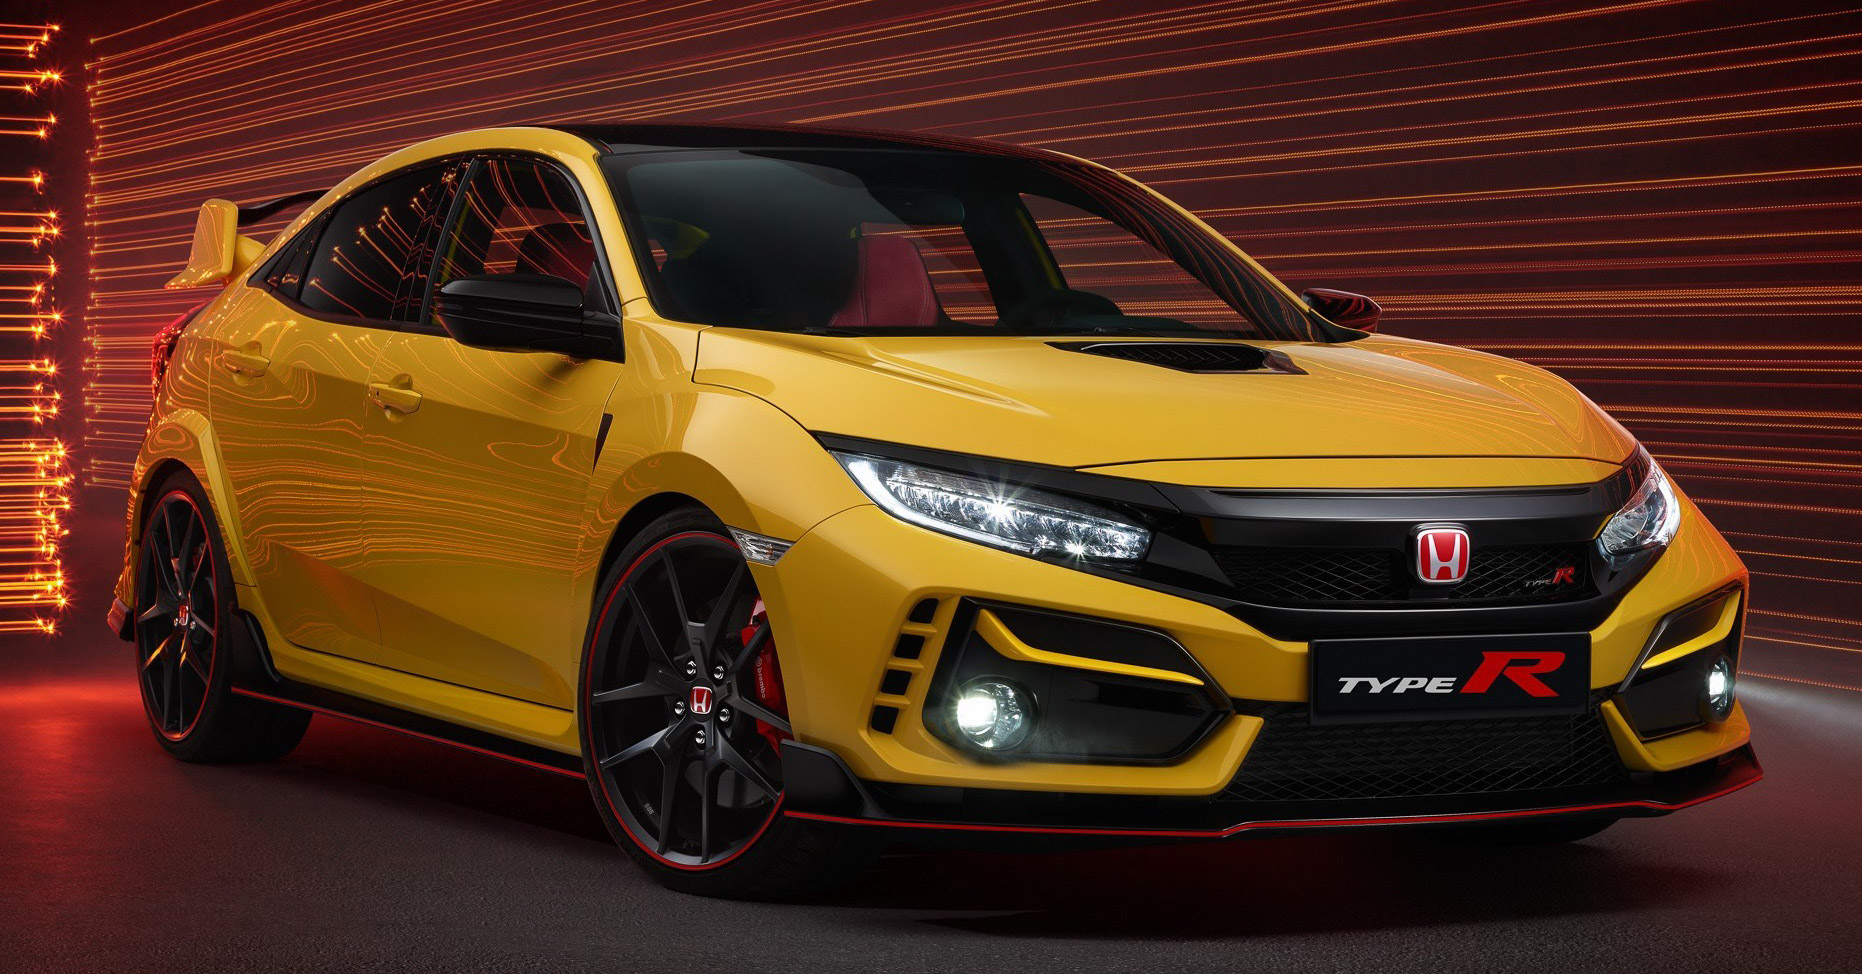 2020 Honda Civic Type R Limited Edition Revealed 47 Kg Lighter Limited Units New Sport Line Joins Range Paultan Org